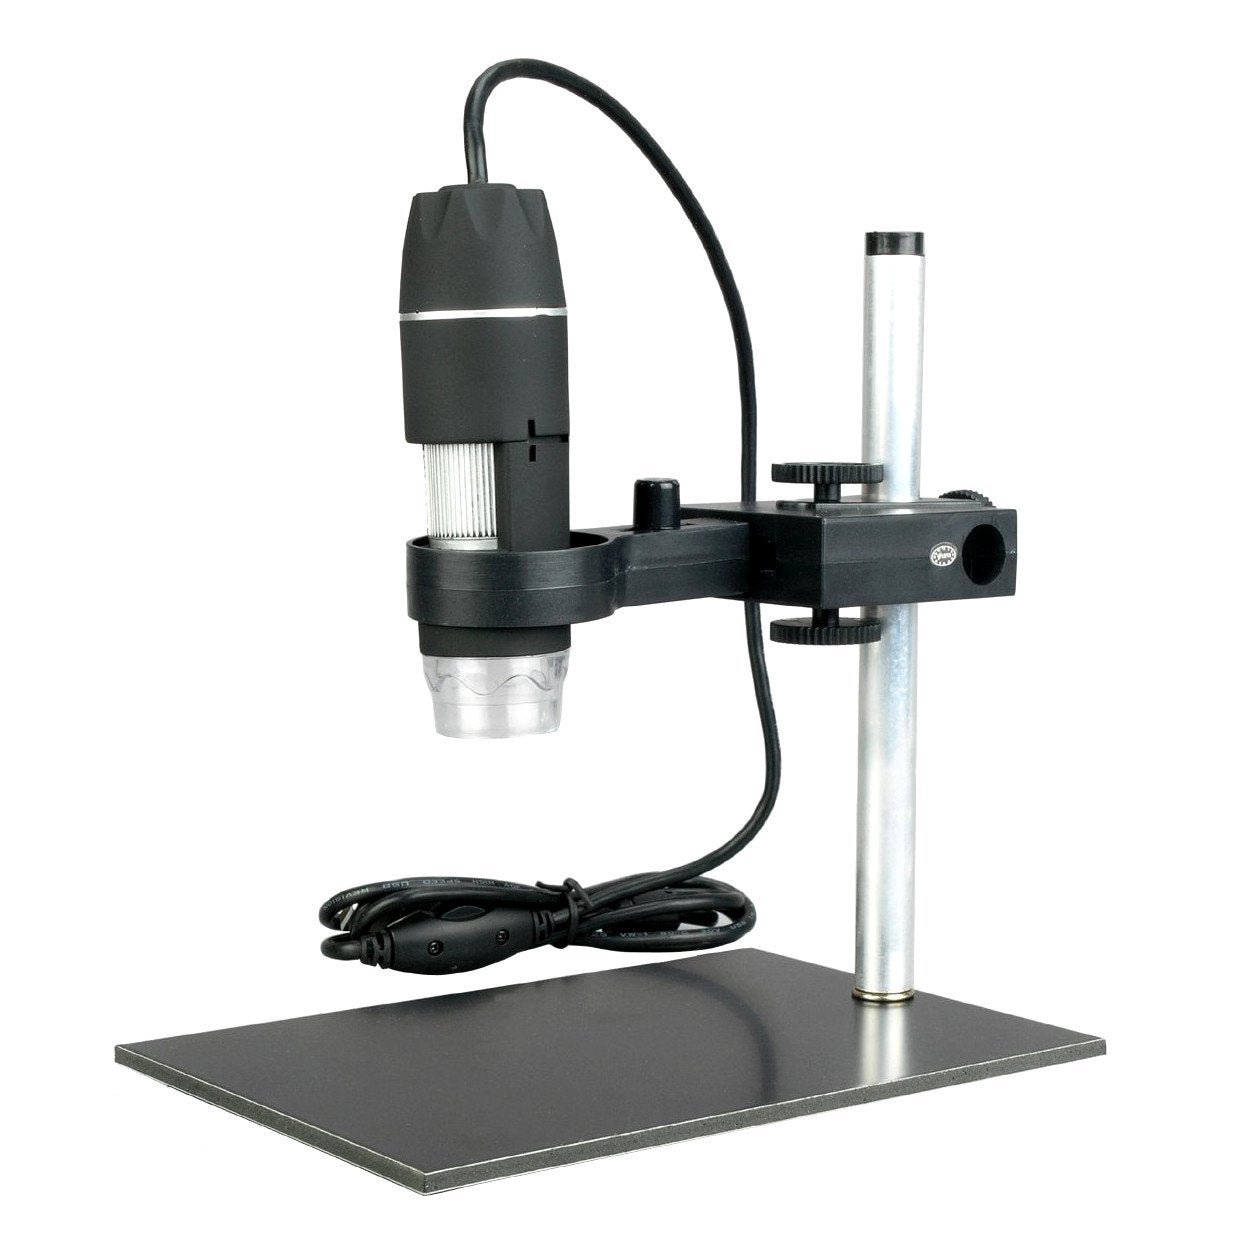 Amscope 10X-200X 0.3MP USB Digital Microscope with LED Illumination and Stand